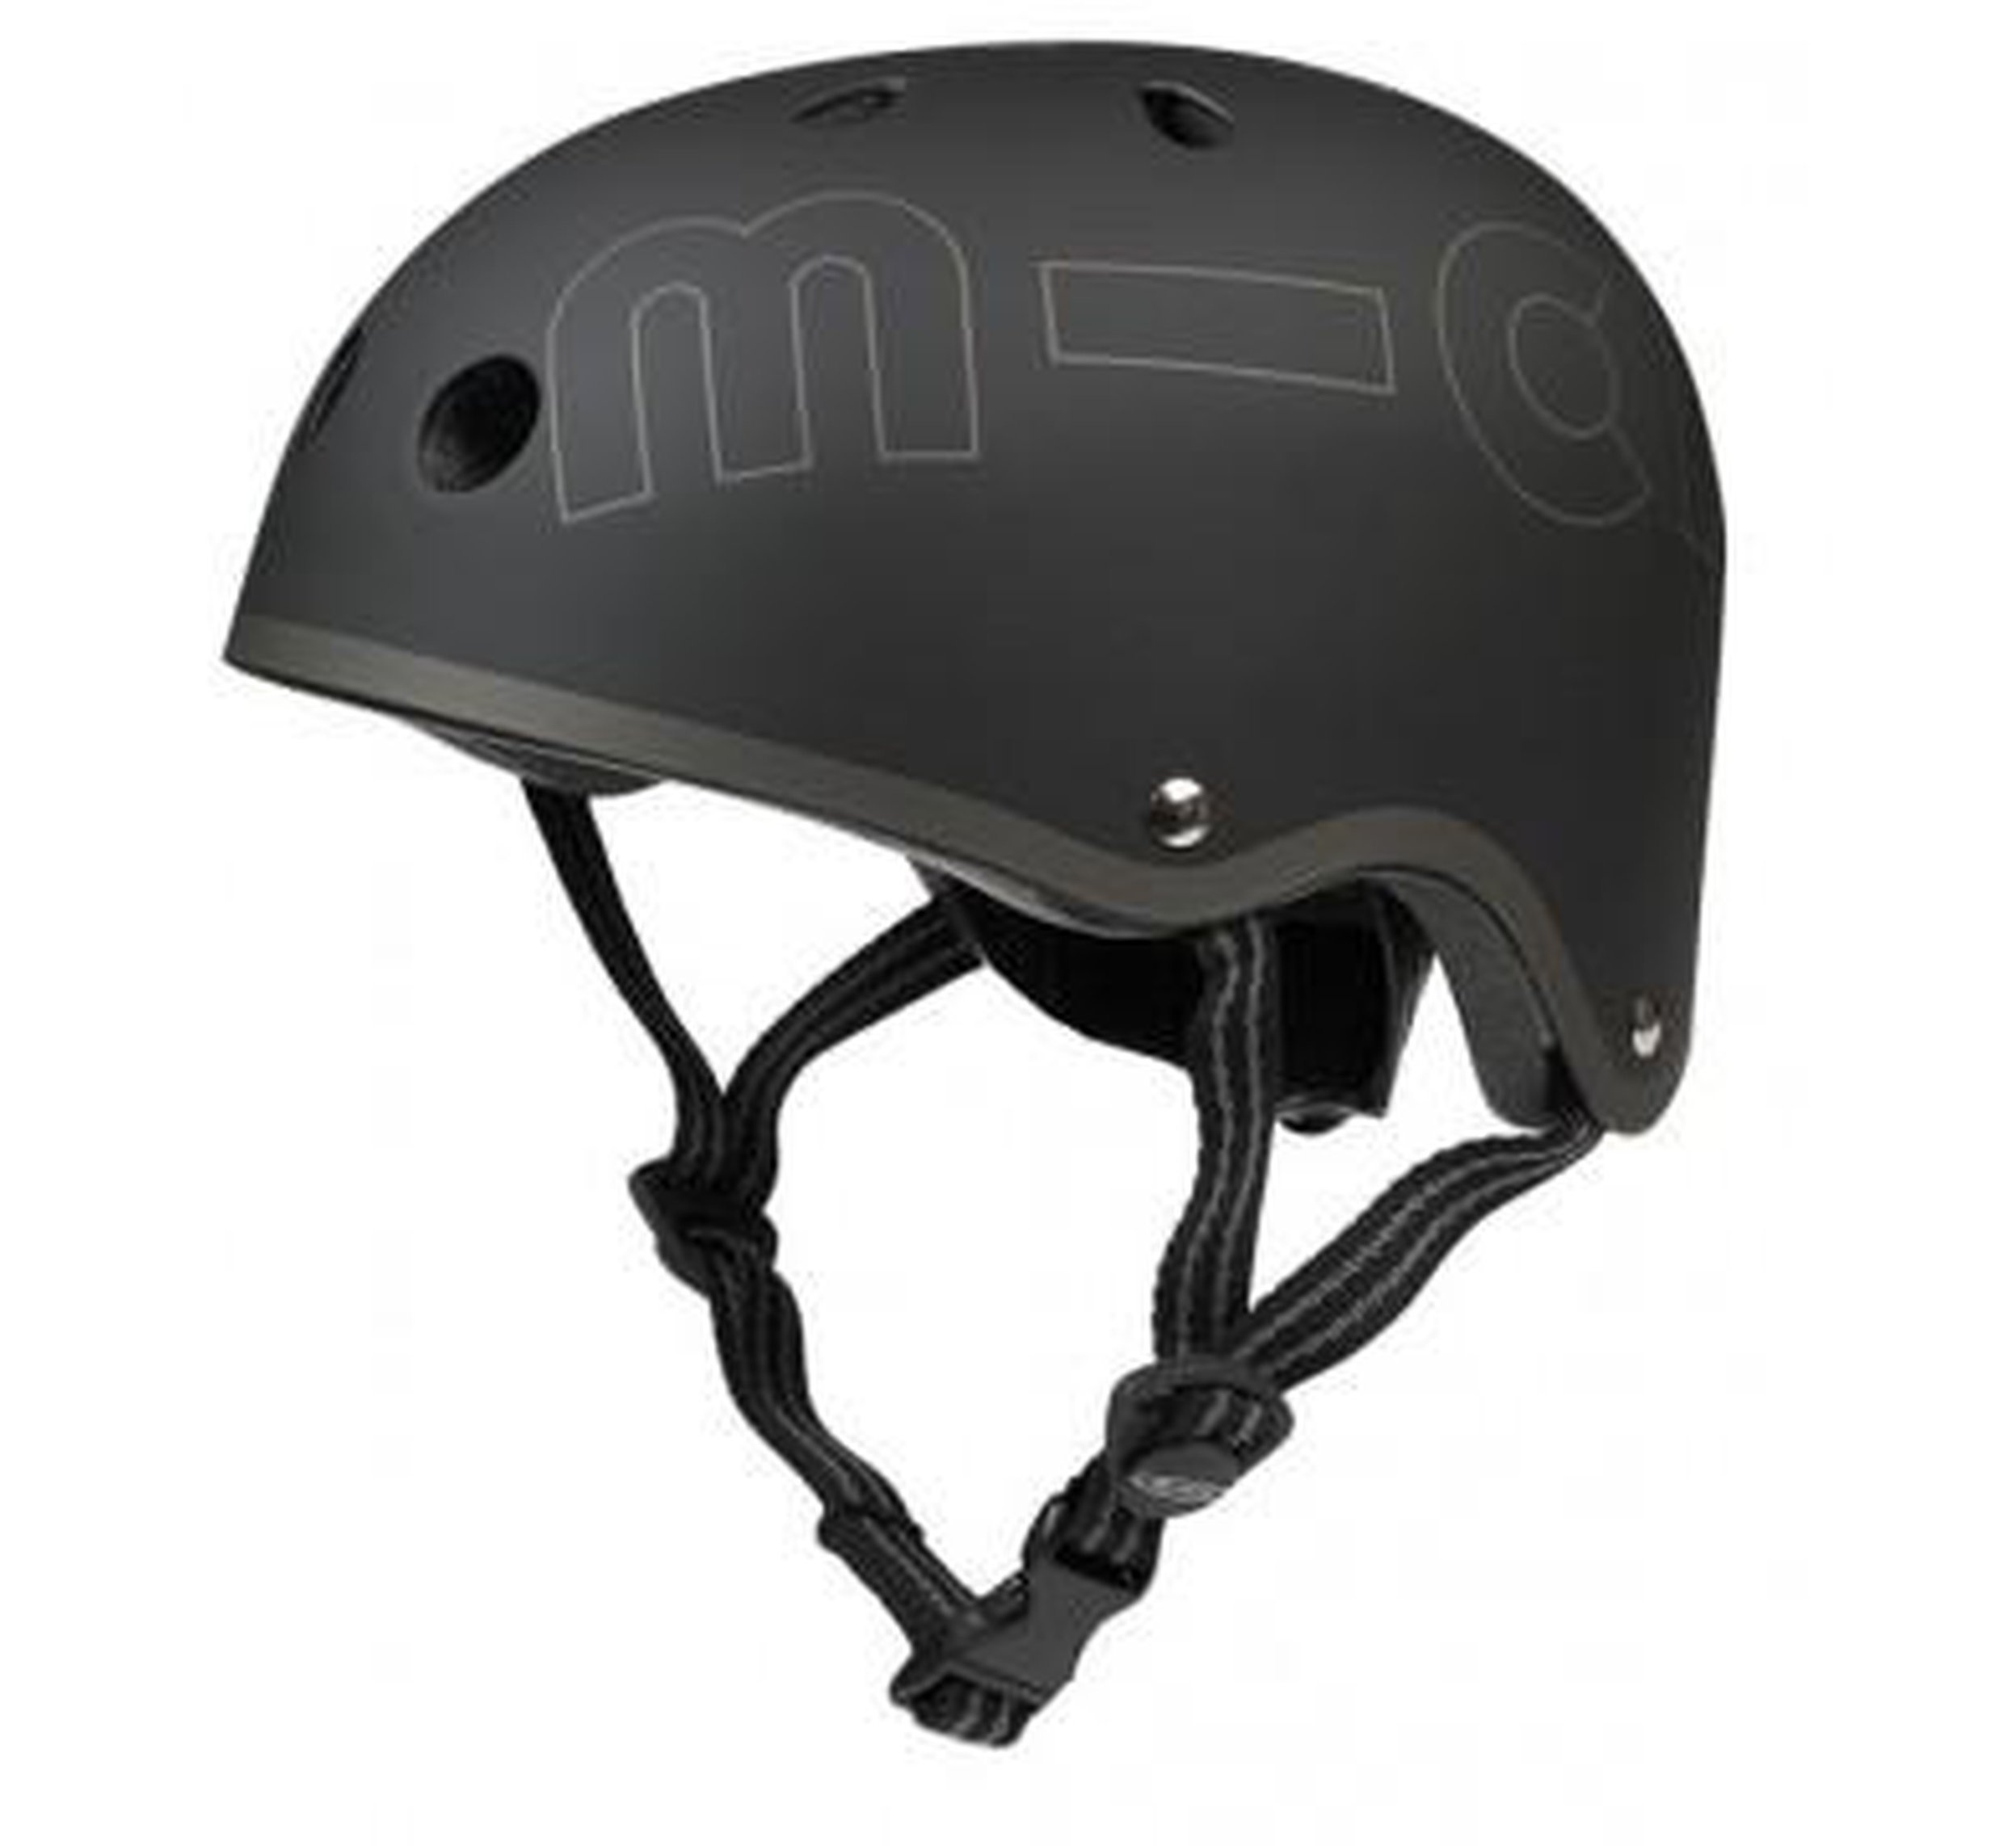 Micro Helmet Black-Helmet-Micro Scooter-S (48cm-52cm)-jellyfishkids.com.cy